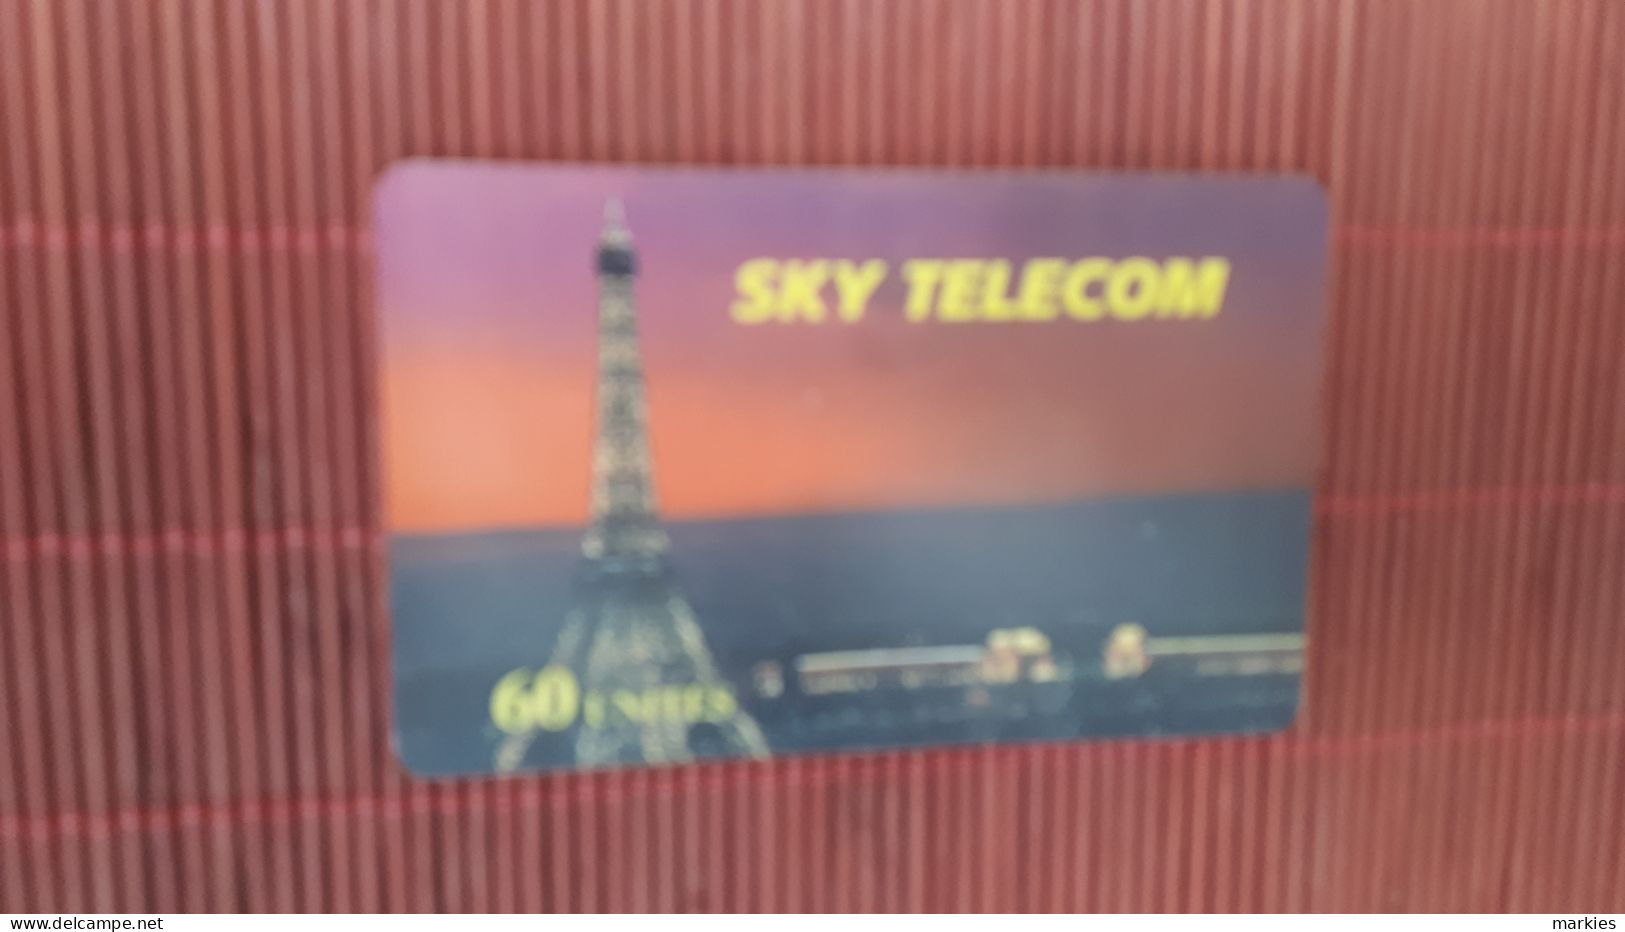 Sky Telecom  Prepaidcard  60 Units  2 Photos - Nachladekarten (Handy/SIM)